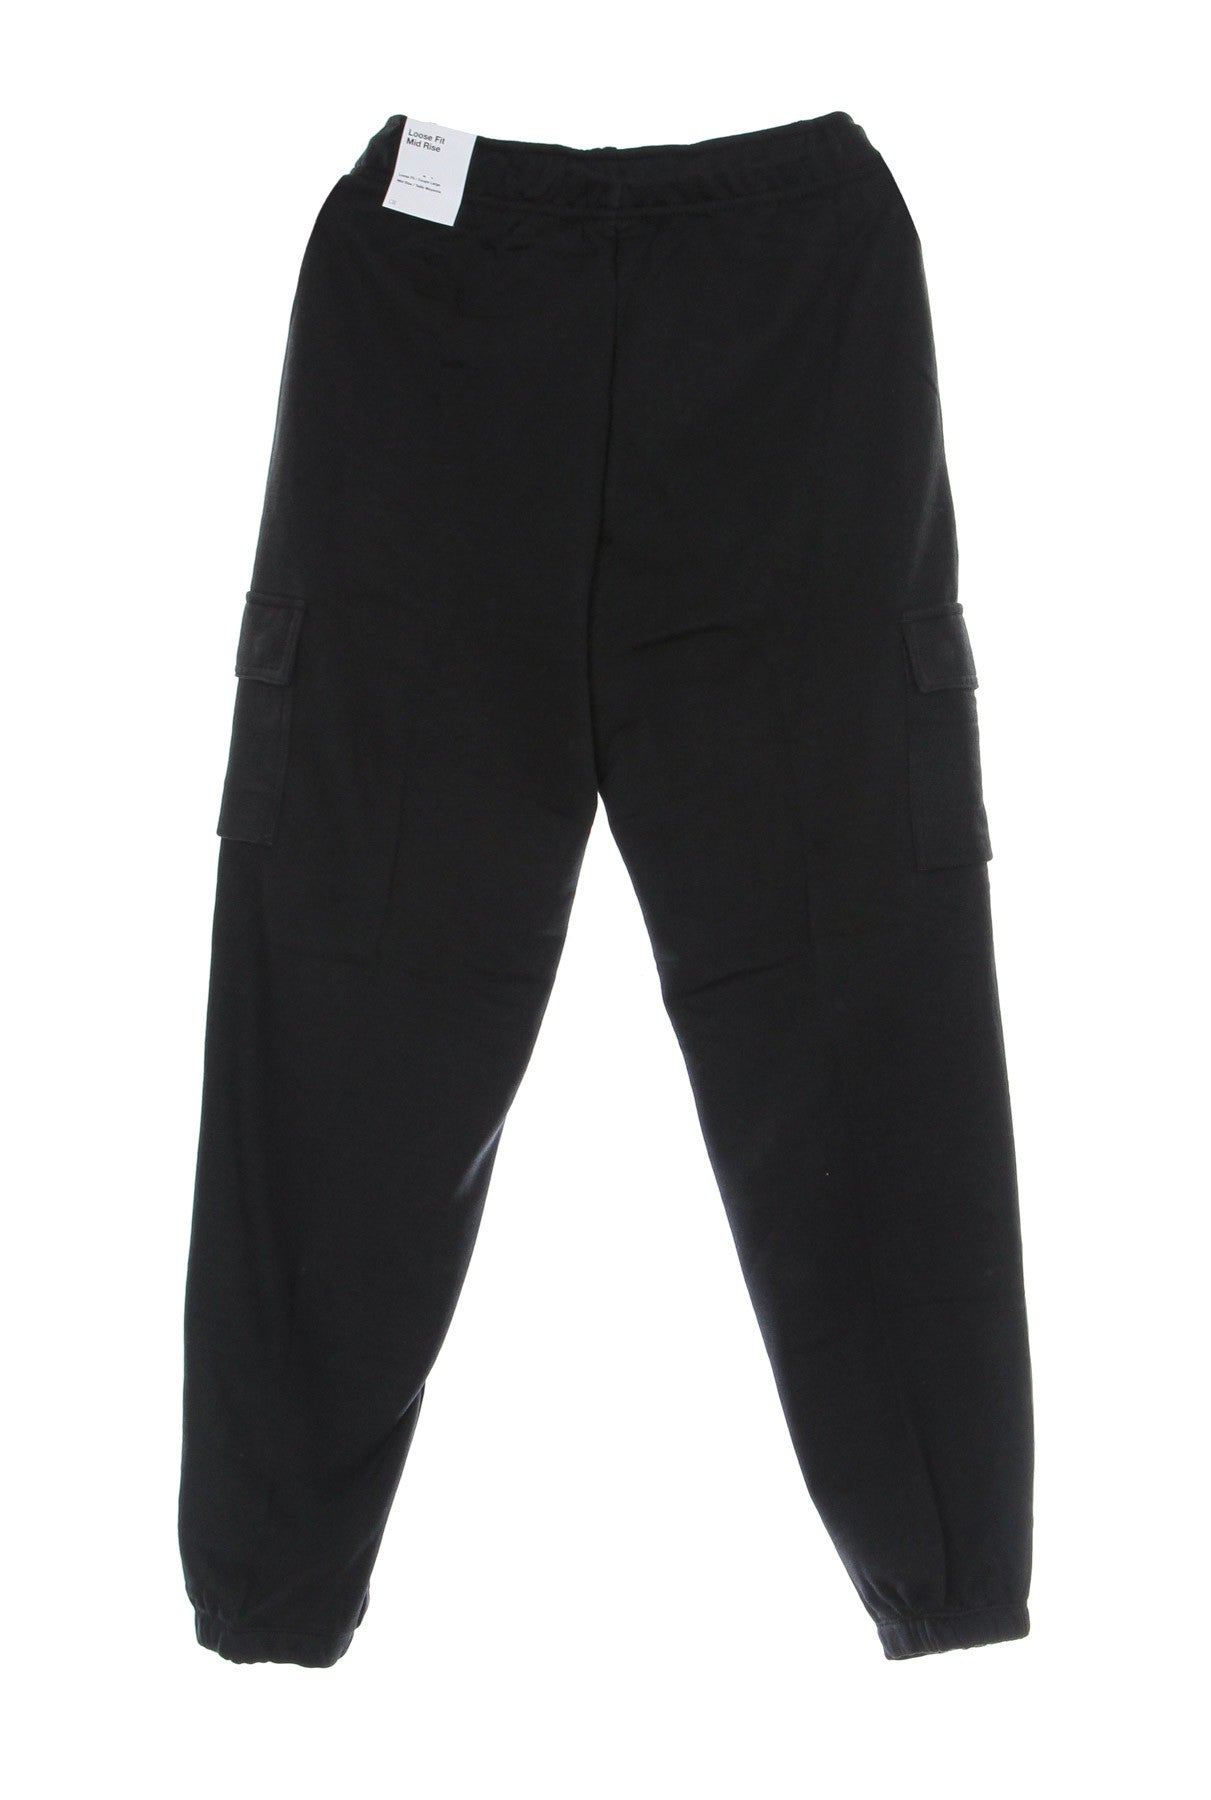 Nike, Pantalone Tuta Felpato Donna W Essential Fleece Mr Cargo Pant, 